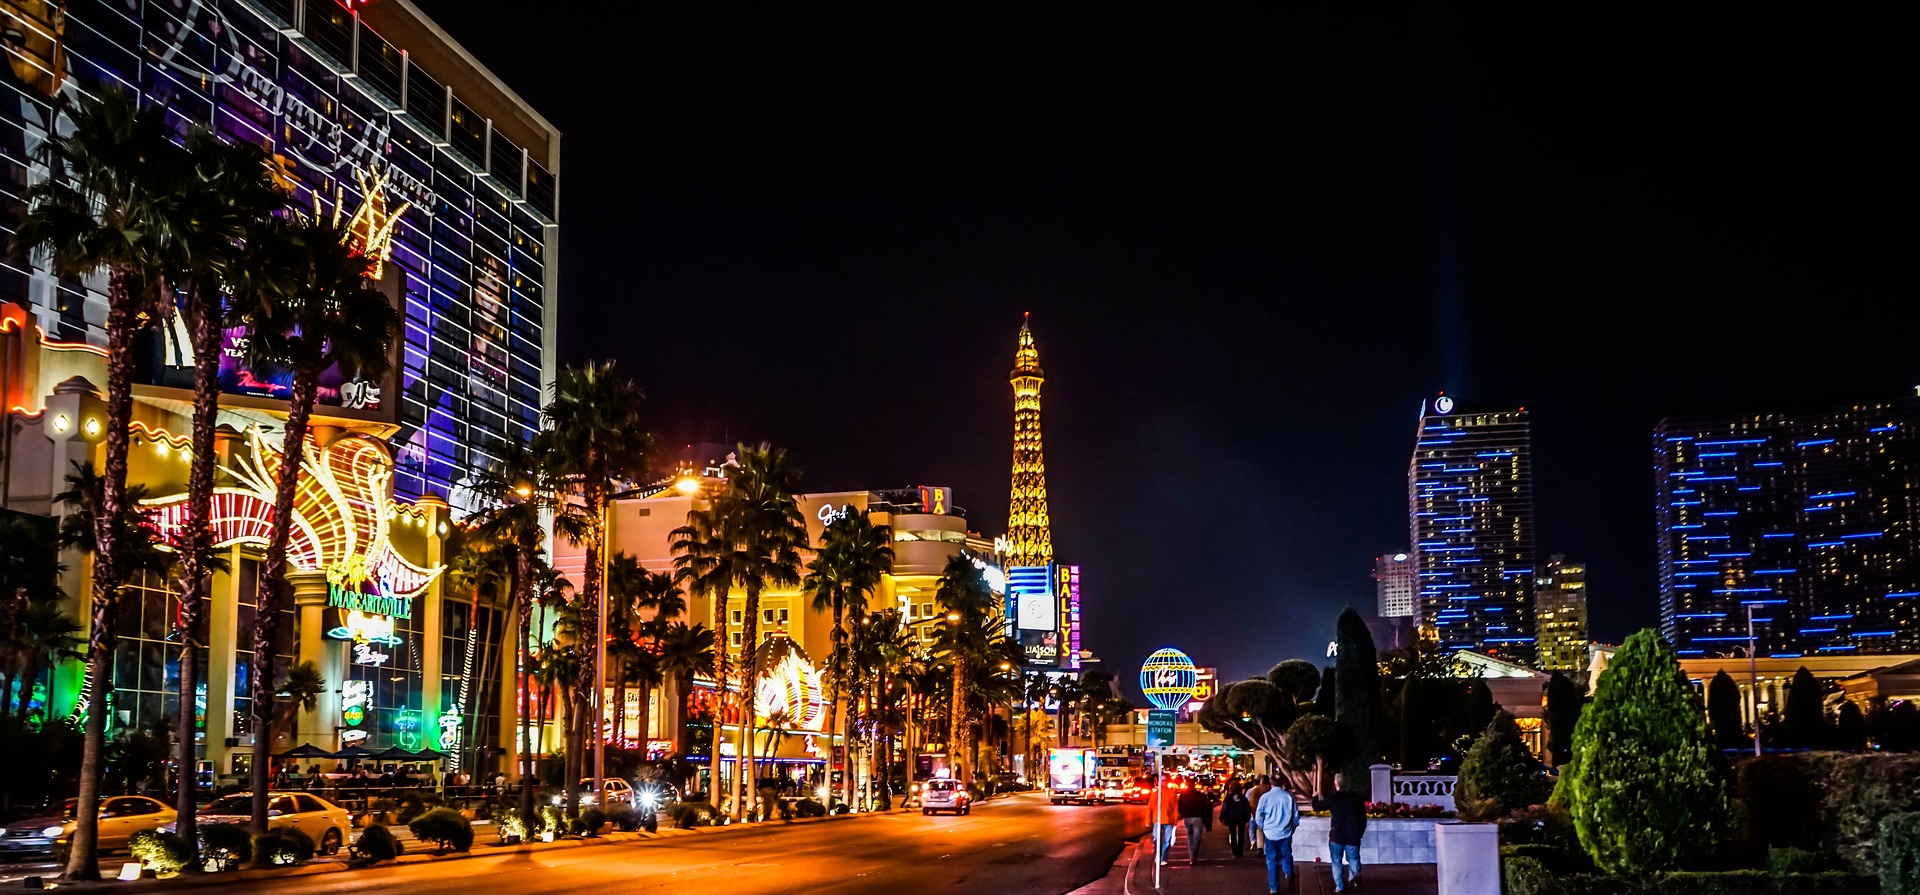 Scene of Las Vegas at night